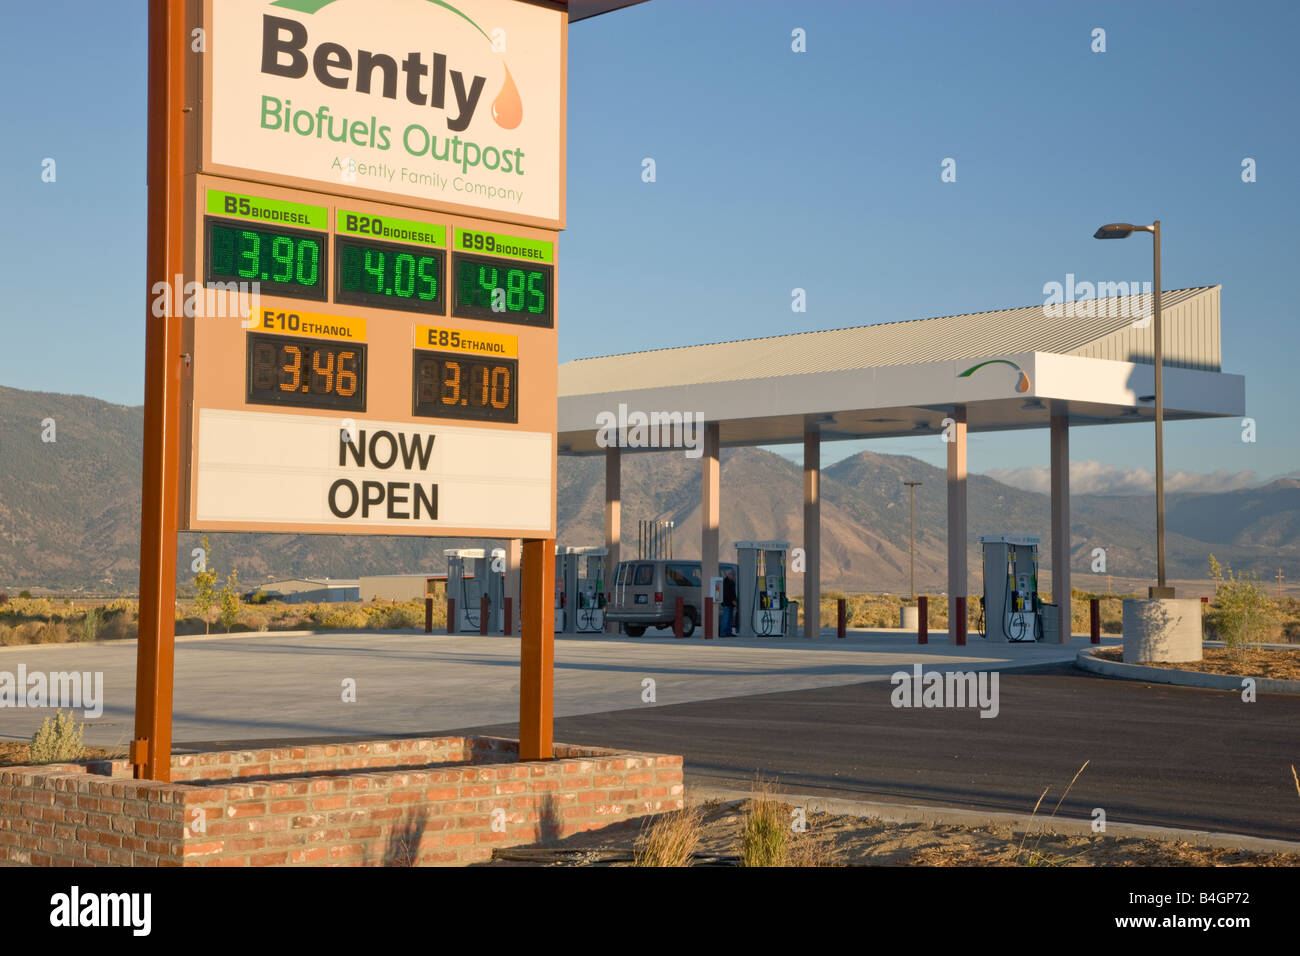 Biofuels service station. Stock Photo